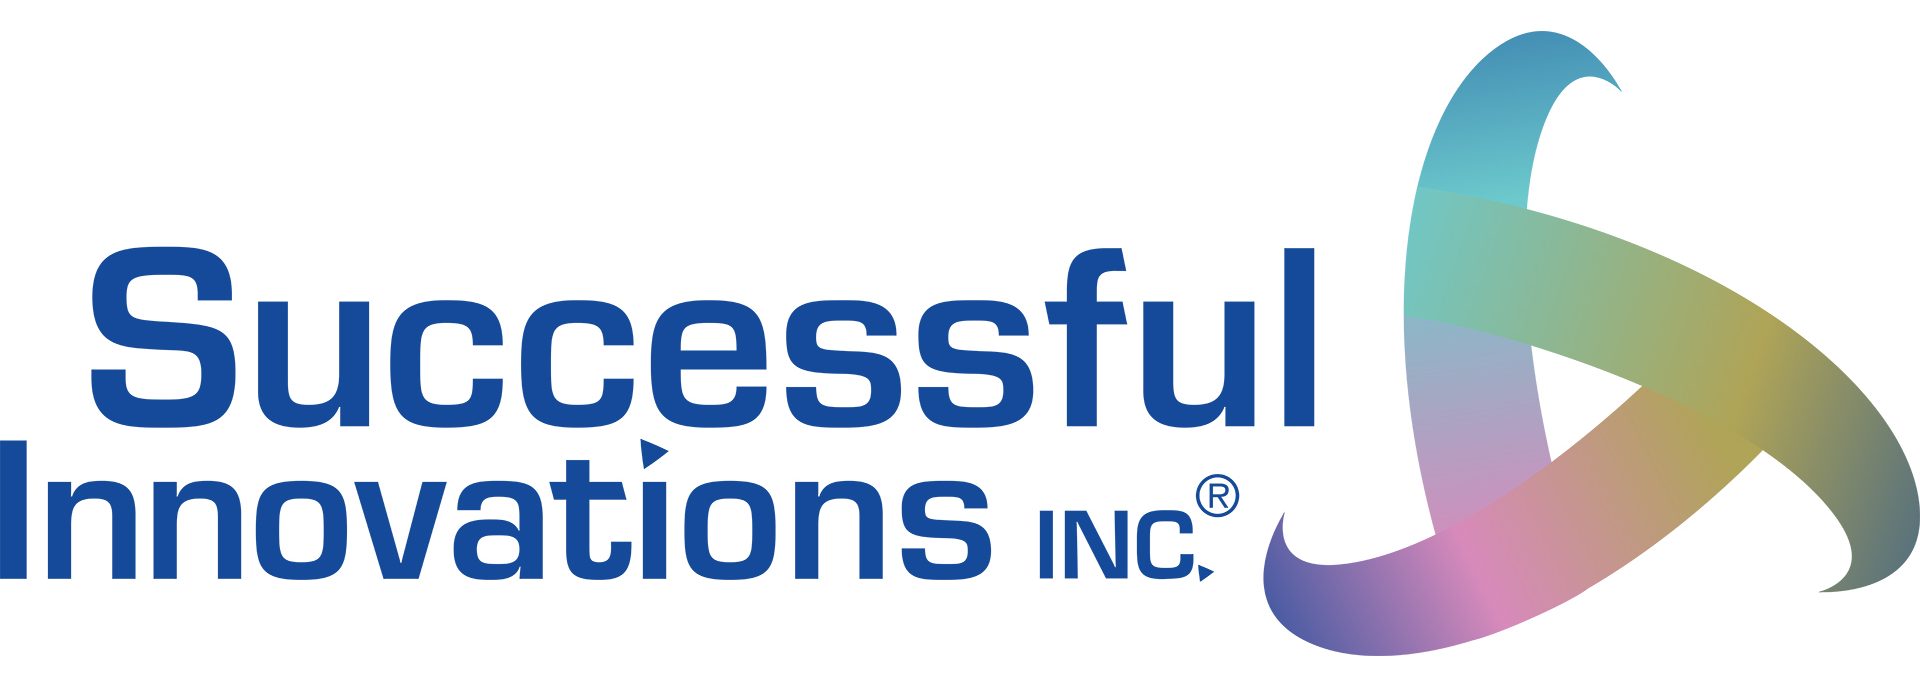 successful innovations logo